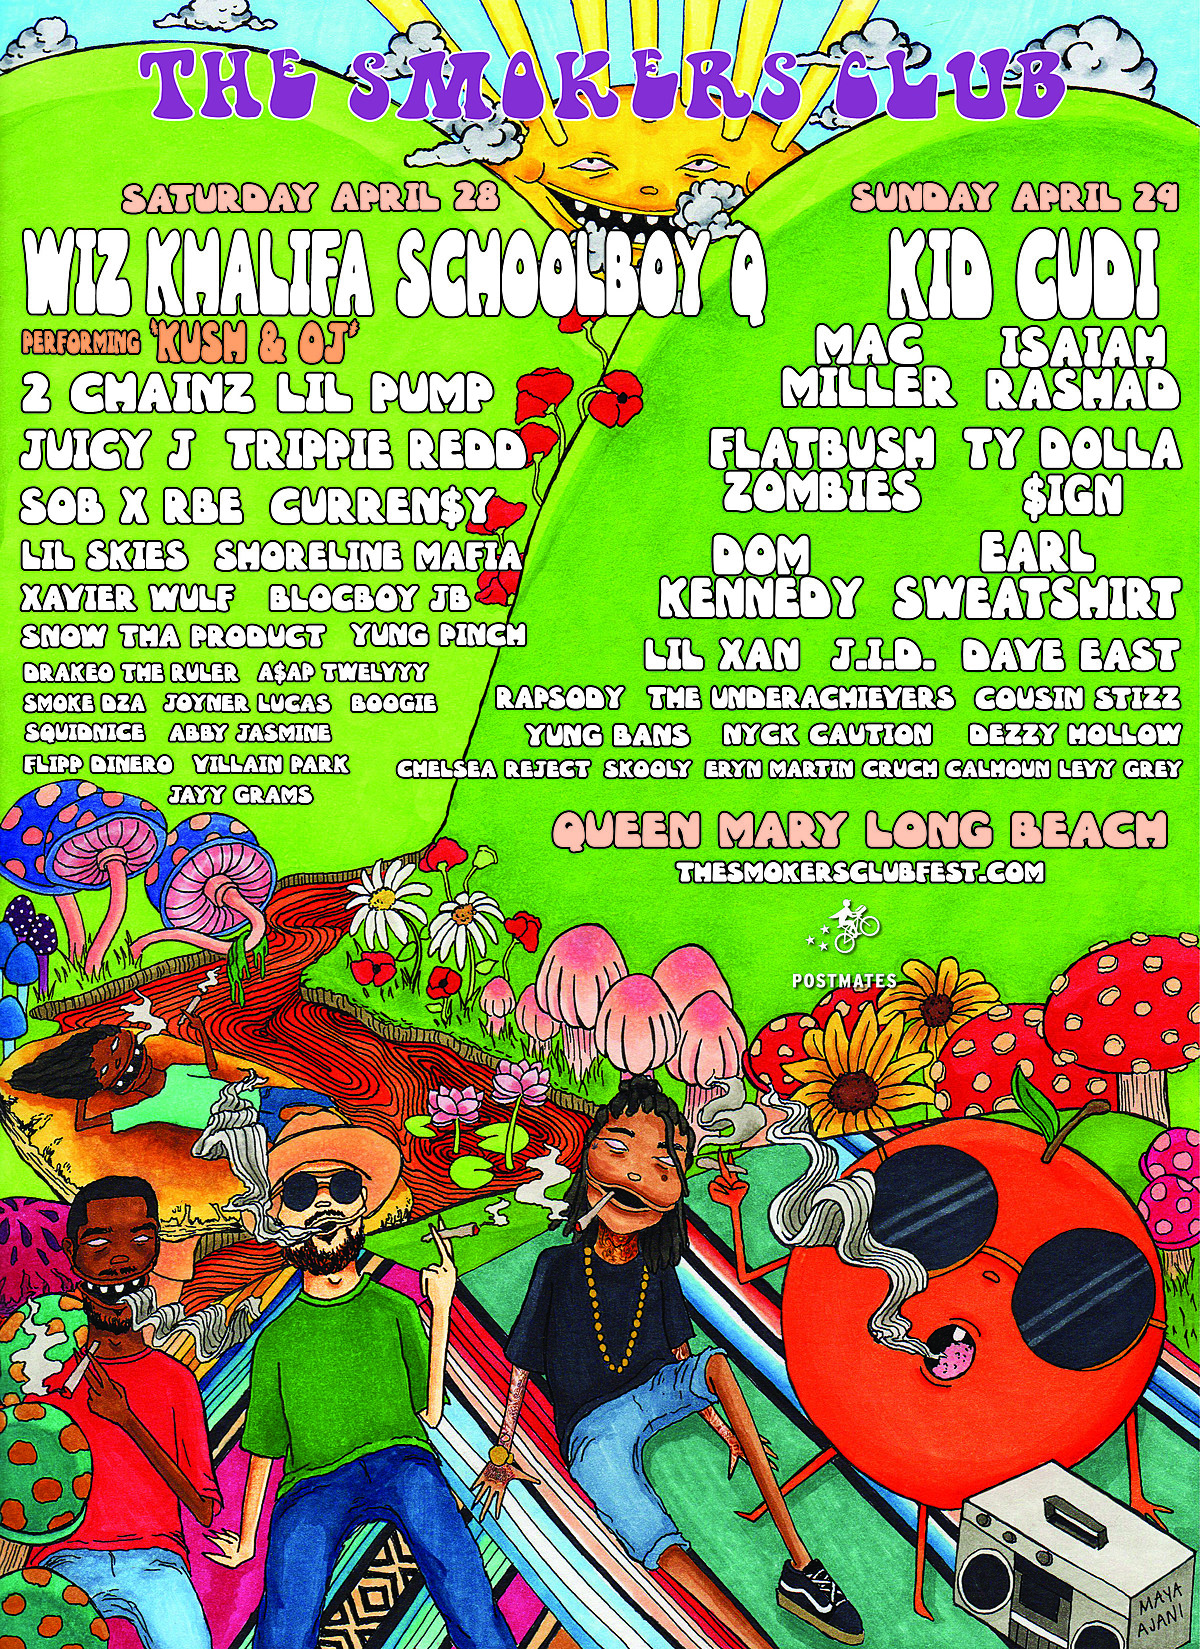 Smokers Club Fest 2018 lineup (Schoolboy Q, Wiz Khalifa, Kid Cudi, 2